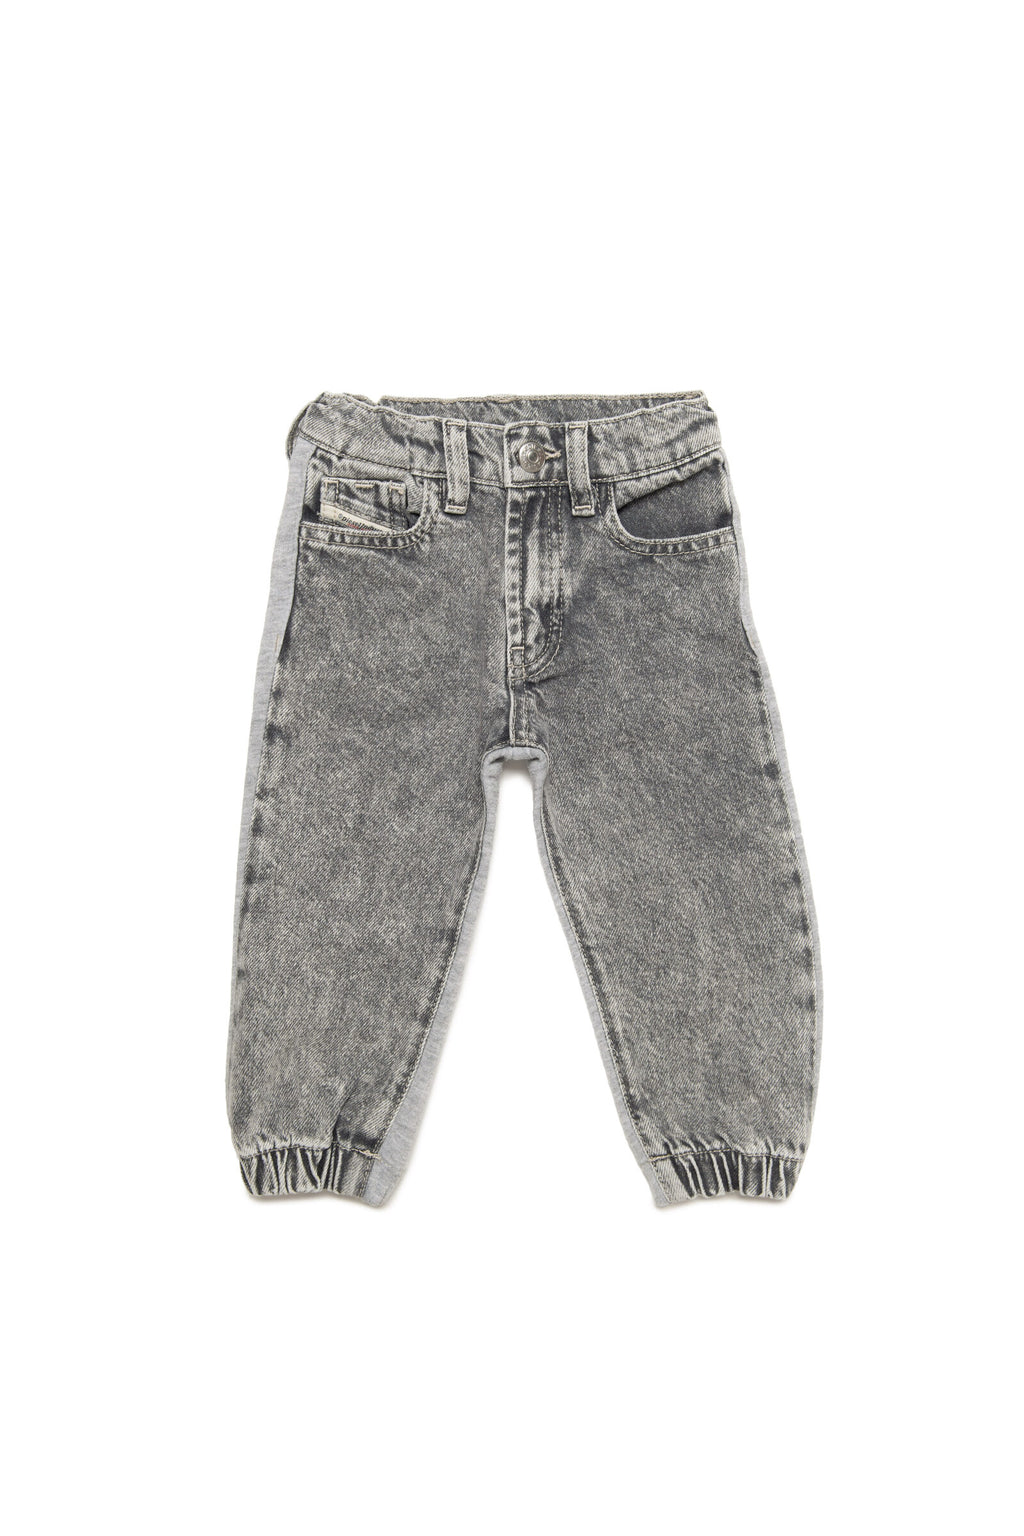 Jeans P-Zerb Regular grises con parte trasera de felpa